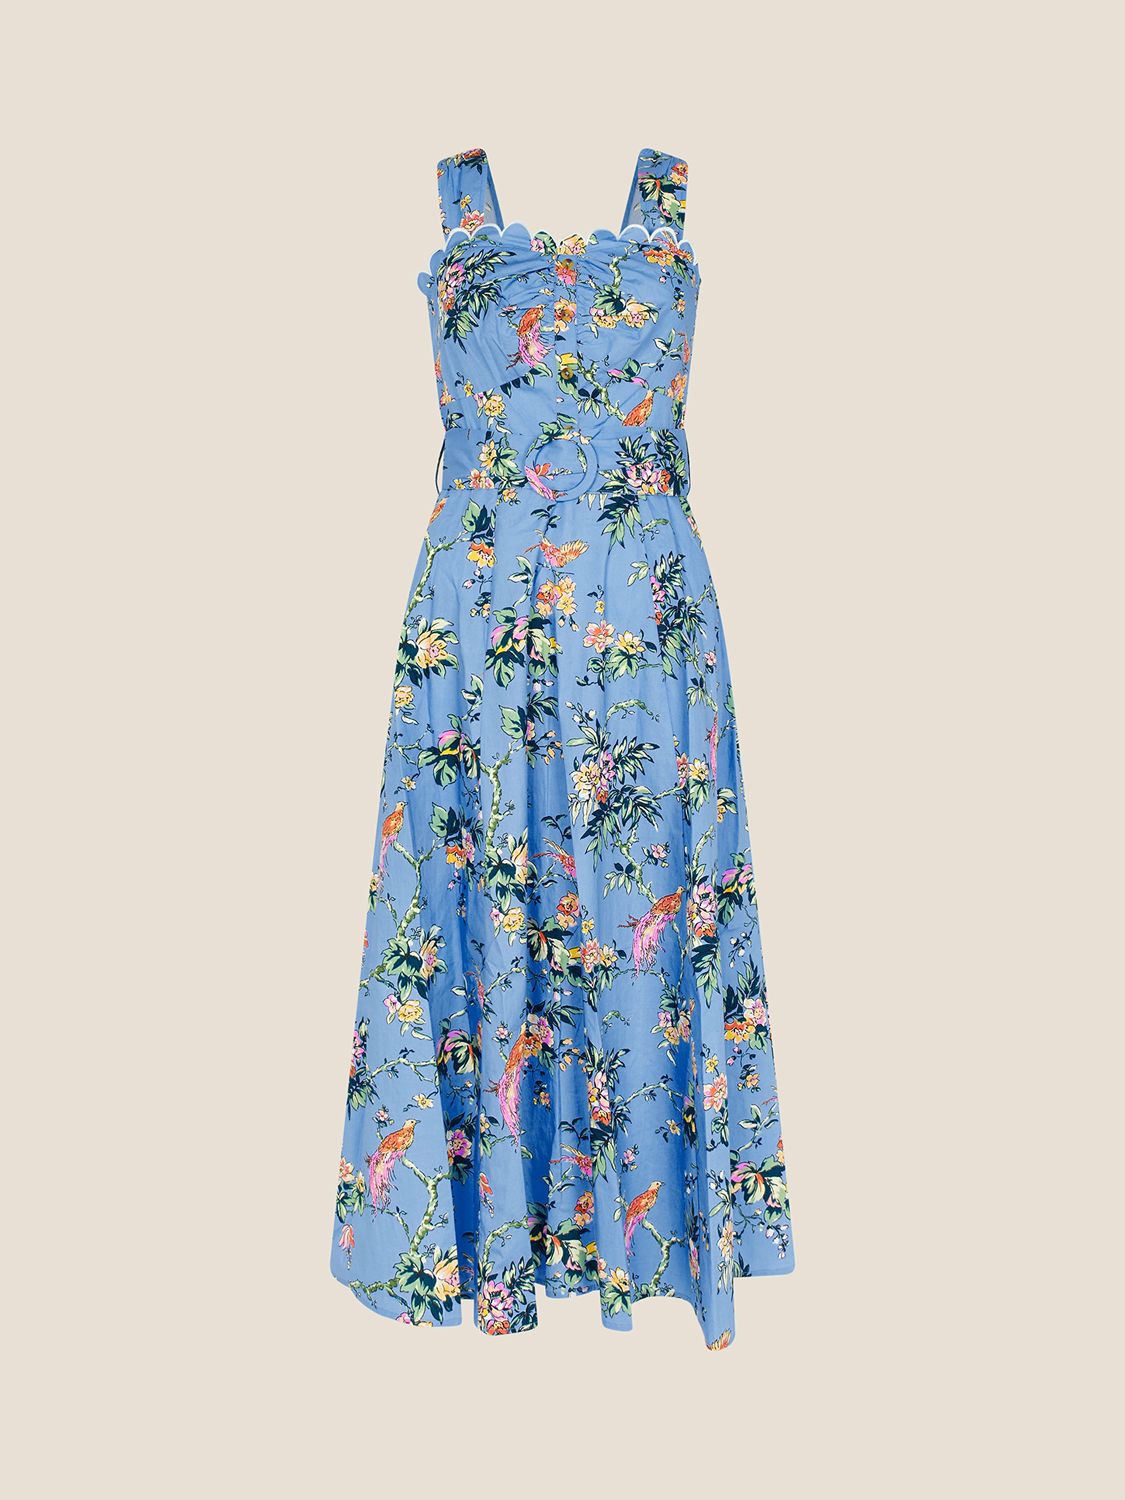 Monsoon Pushka Floral Belted Midi Dress, Blue/Multi, 8